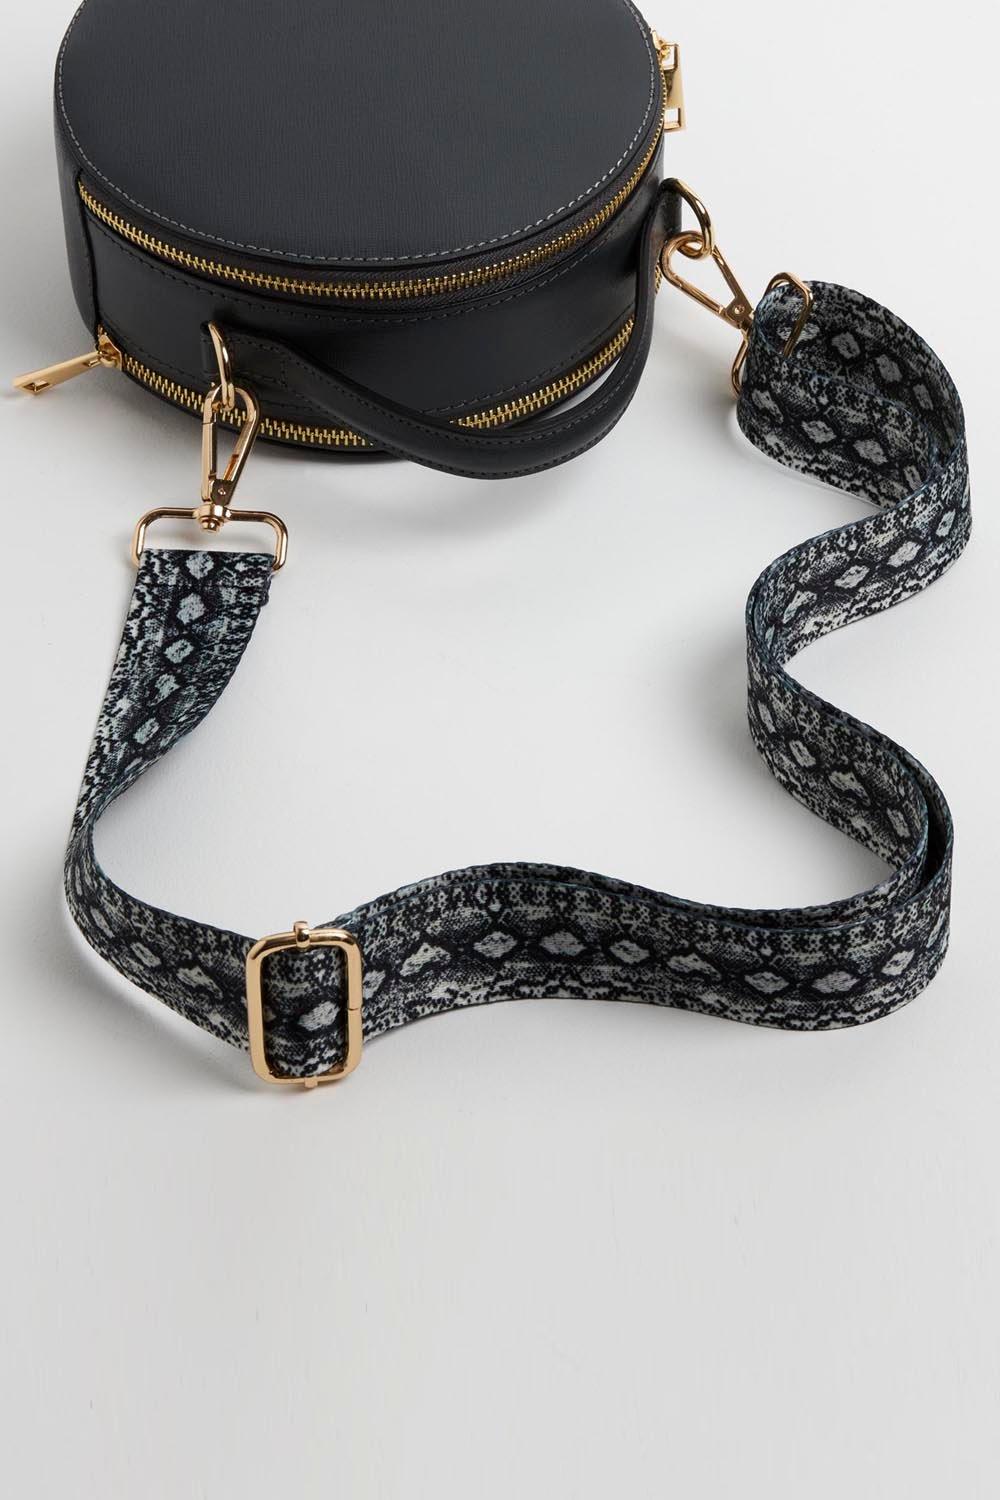 Круглая сумка через плечо 'Rome' со змеиным ремешком Betsy & Floss, серый